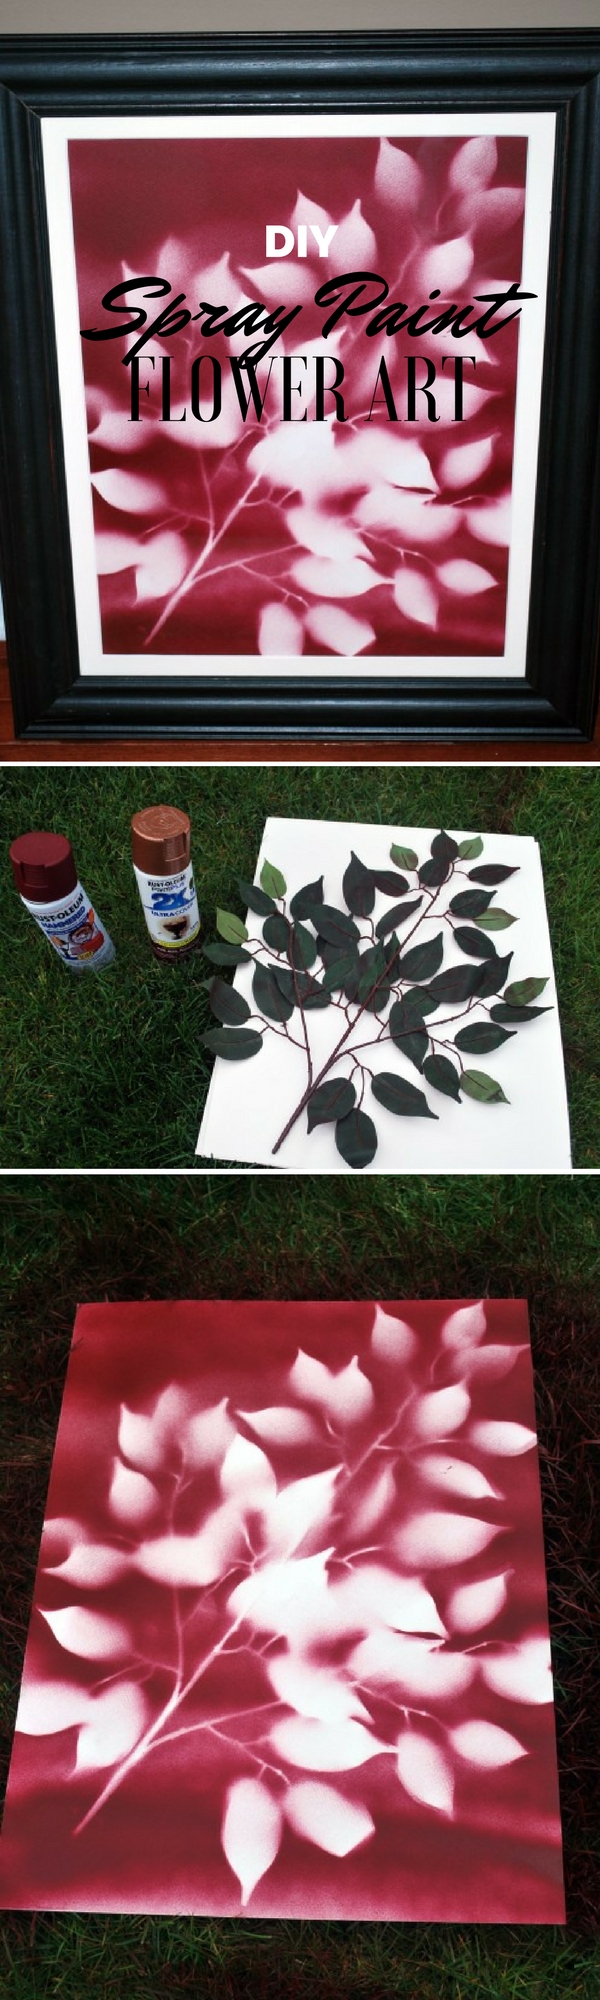 7.DIY Spray Paint Flowered Art